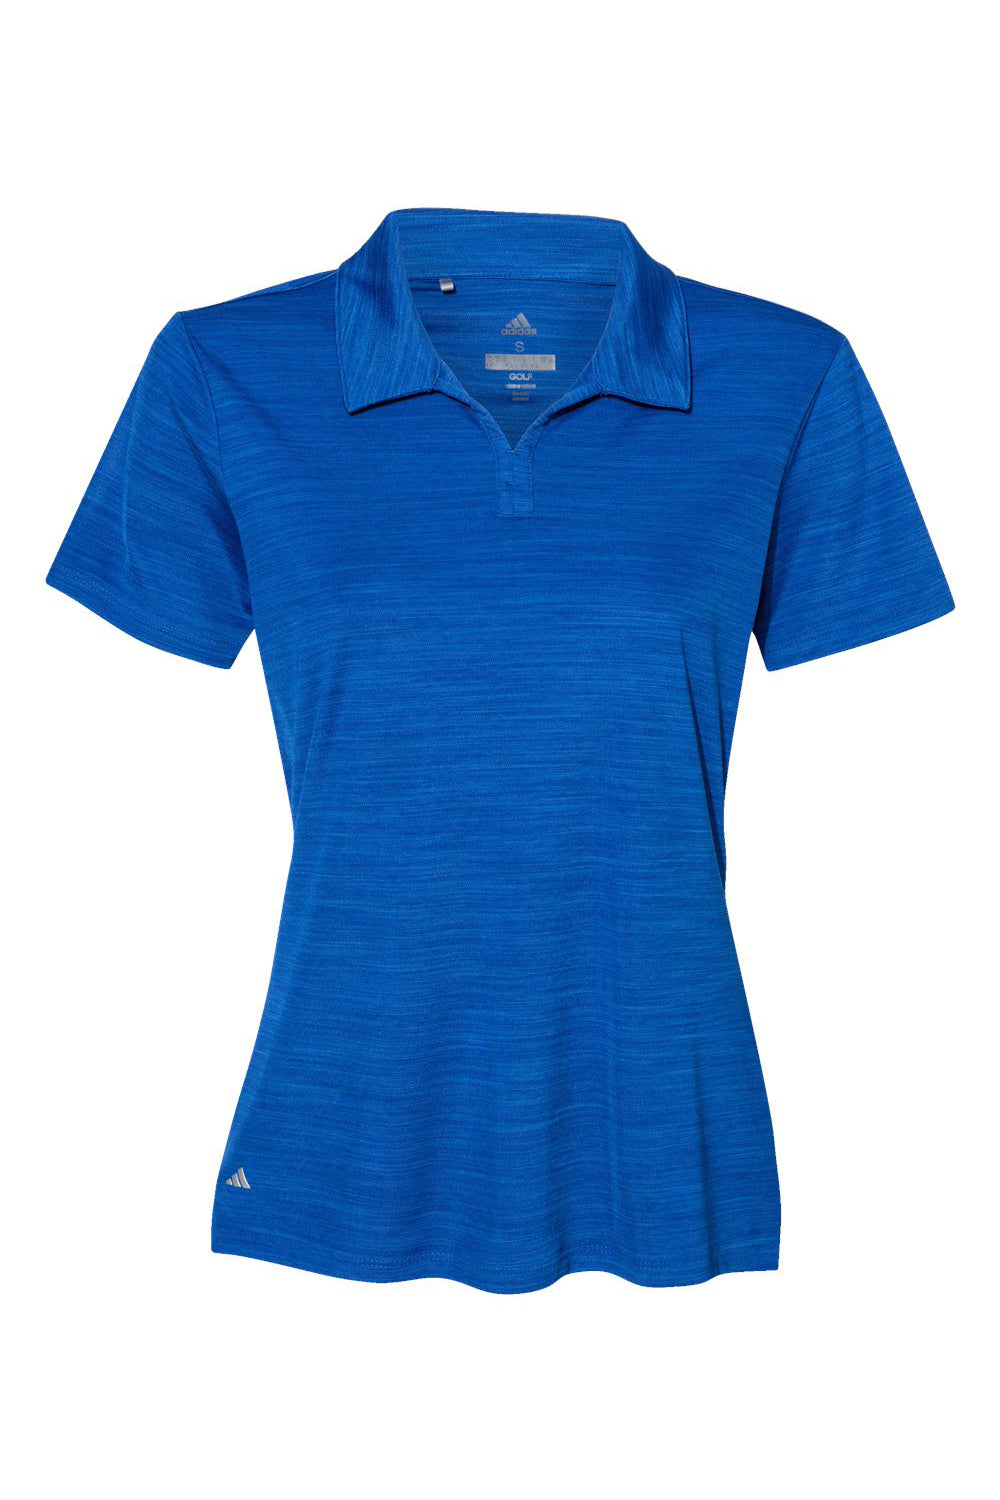 Adidas A403 Womens UPF 50+ Short Sleeve Polo Shirt Collegiate Royal Blue Melange Flat Front